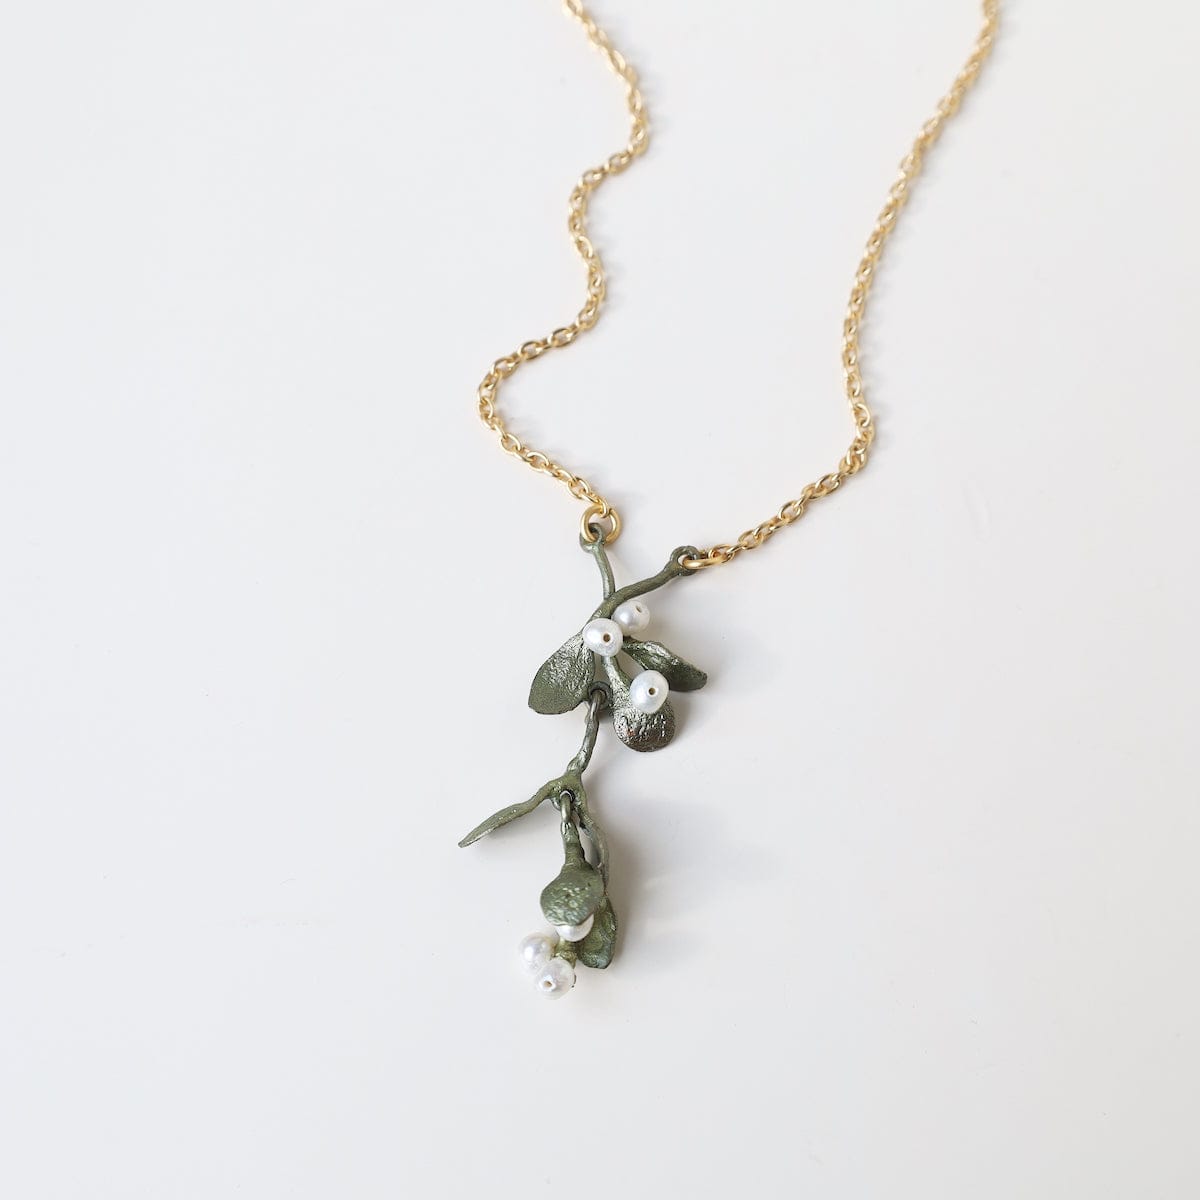 NKL Mistletoe Pendant Necklace